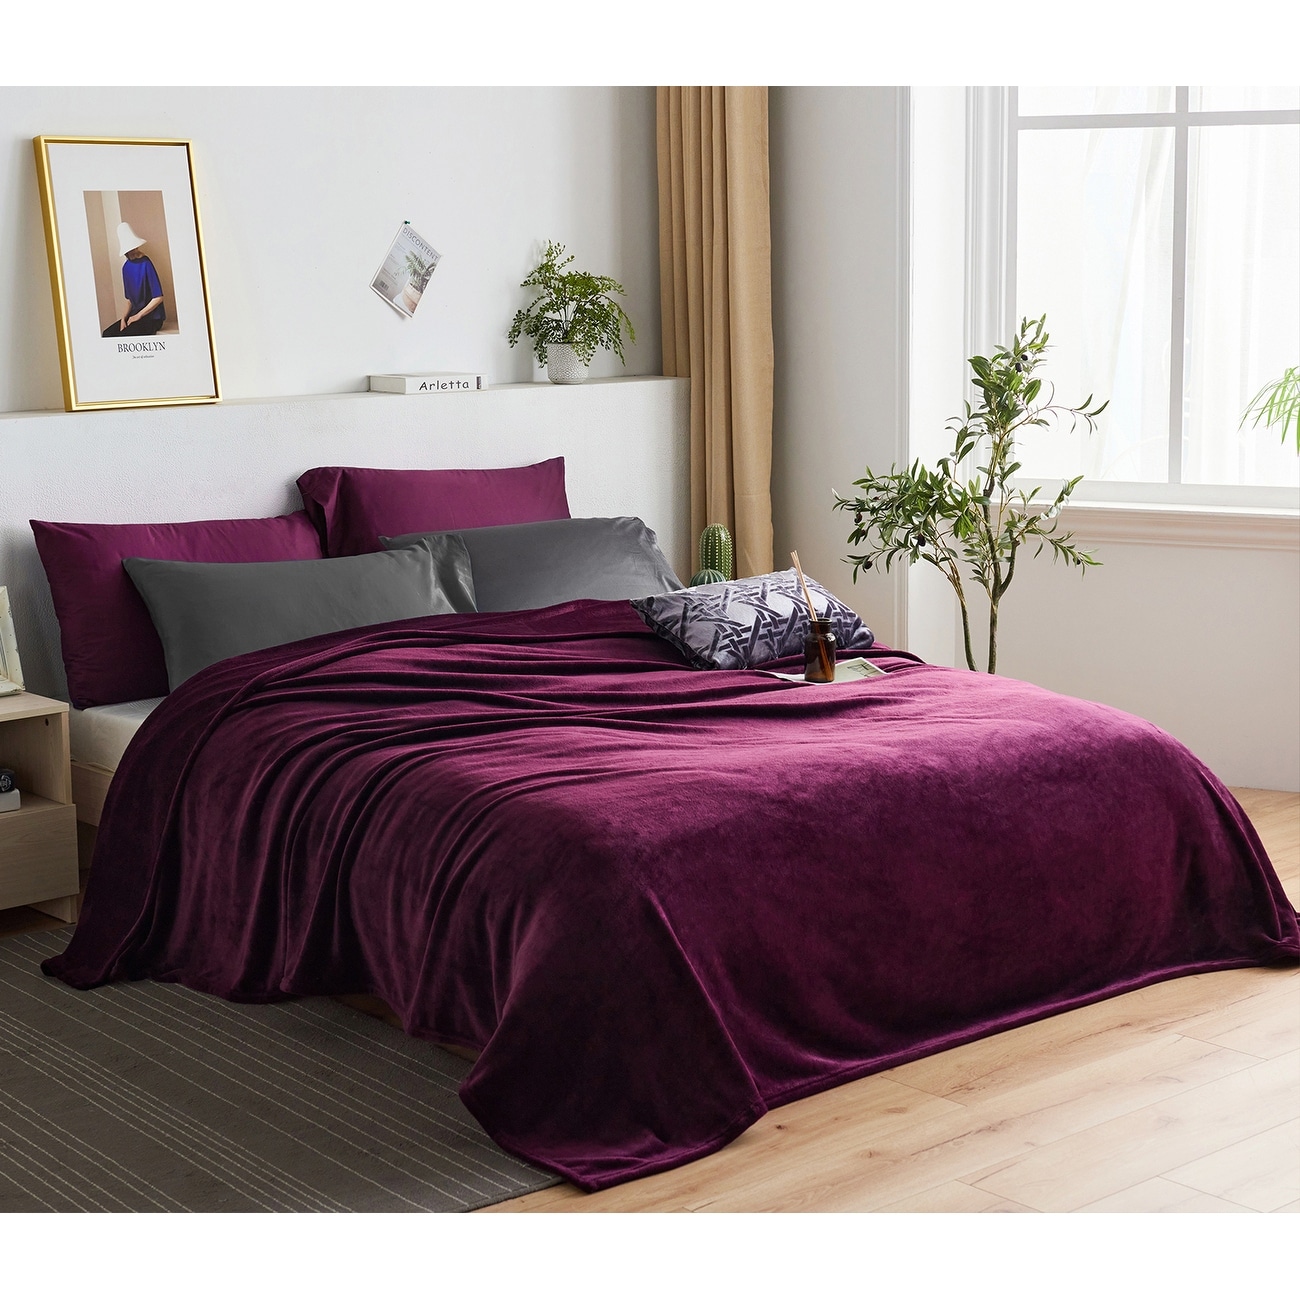 Warm Plush Velvet Throw Blanket Super Soft Mat Home Bedding Twin Queen King Size 